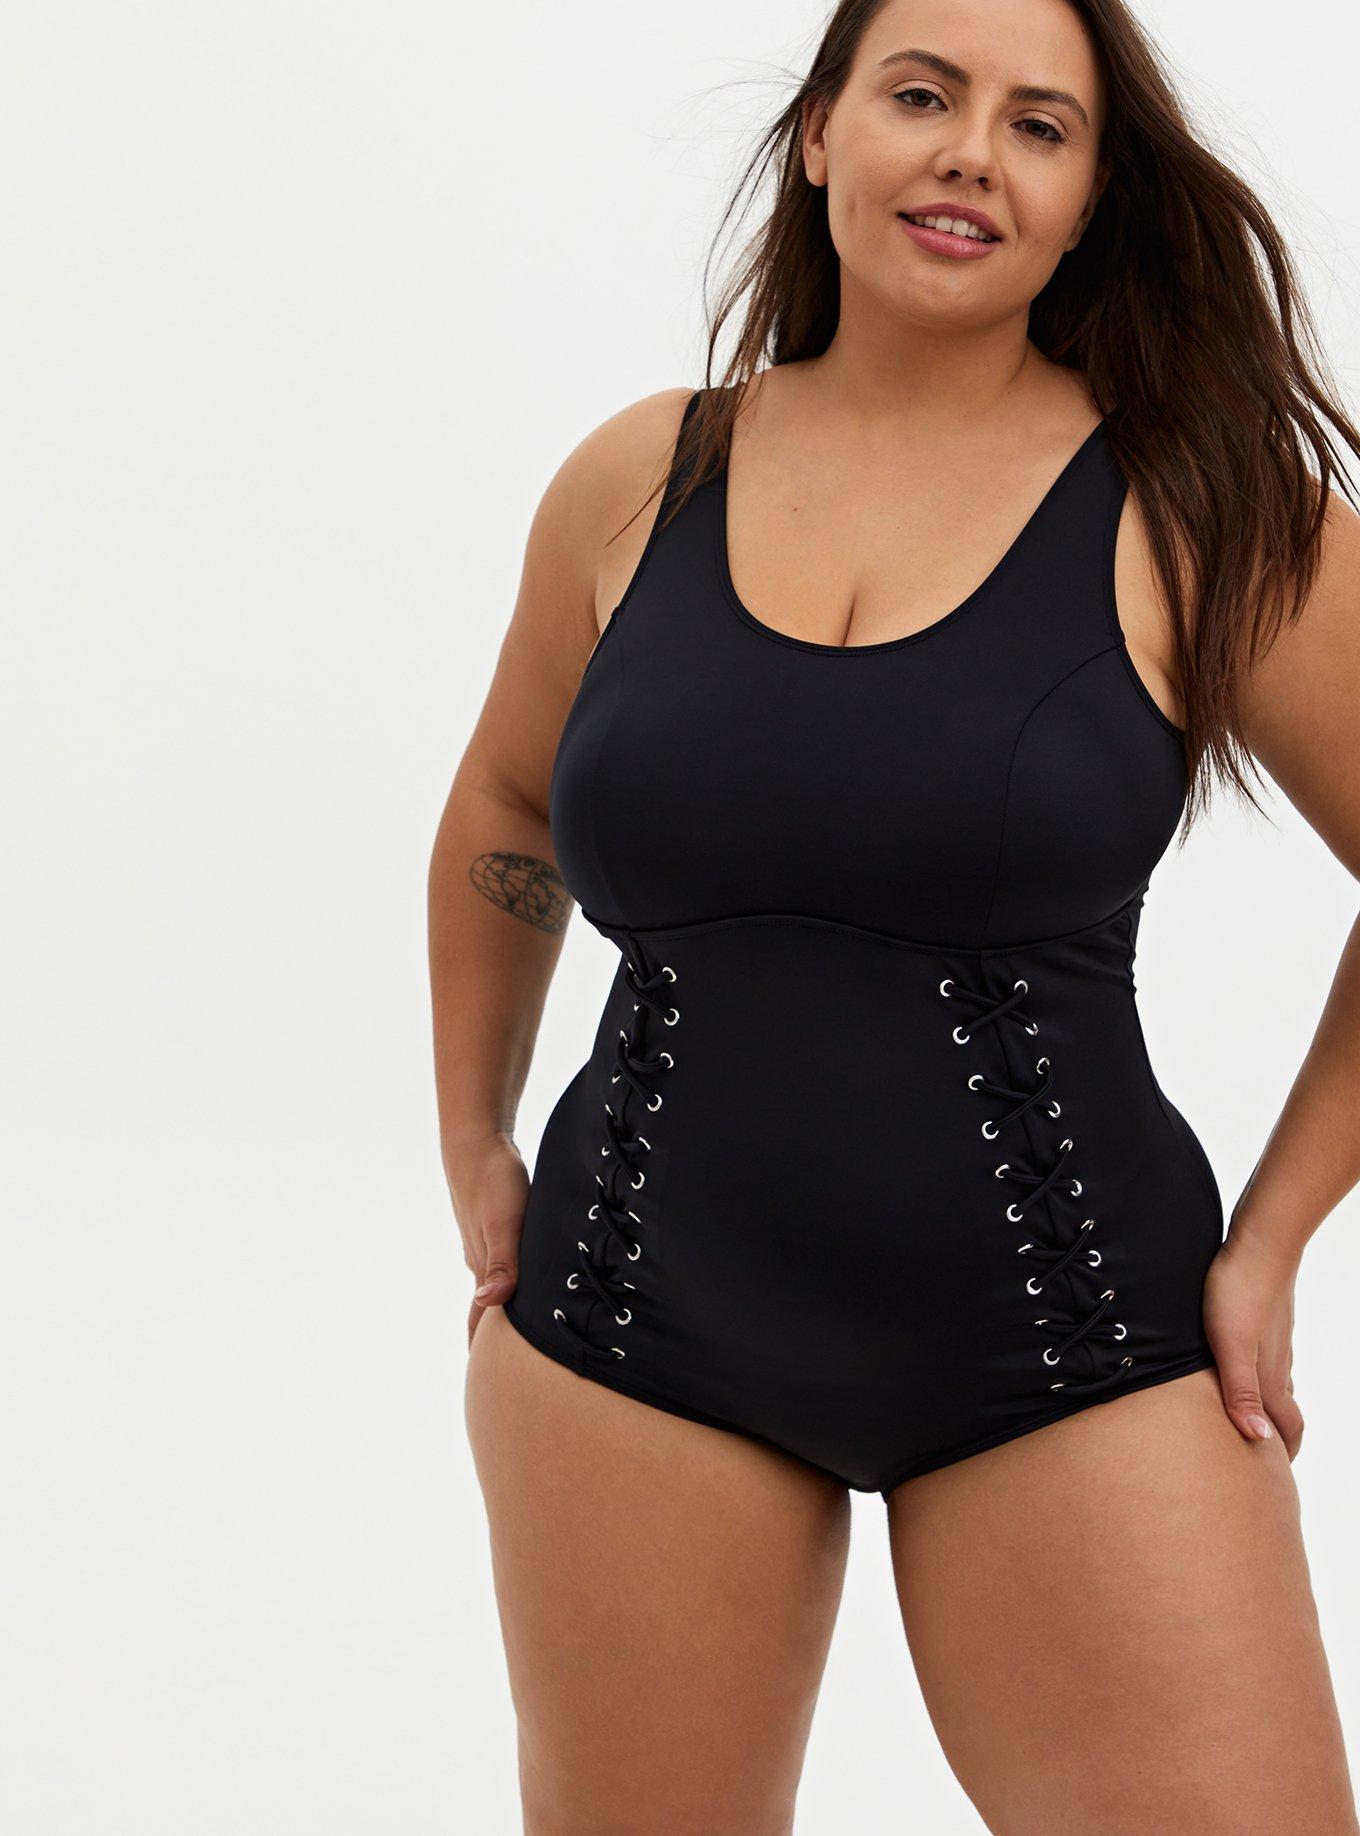 Plus Size - Black Wireless Lattice Front One-Piece Swimsuit - Torrid